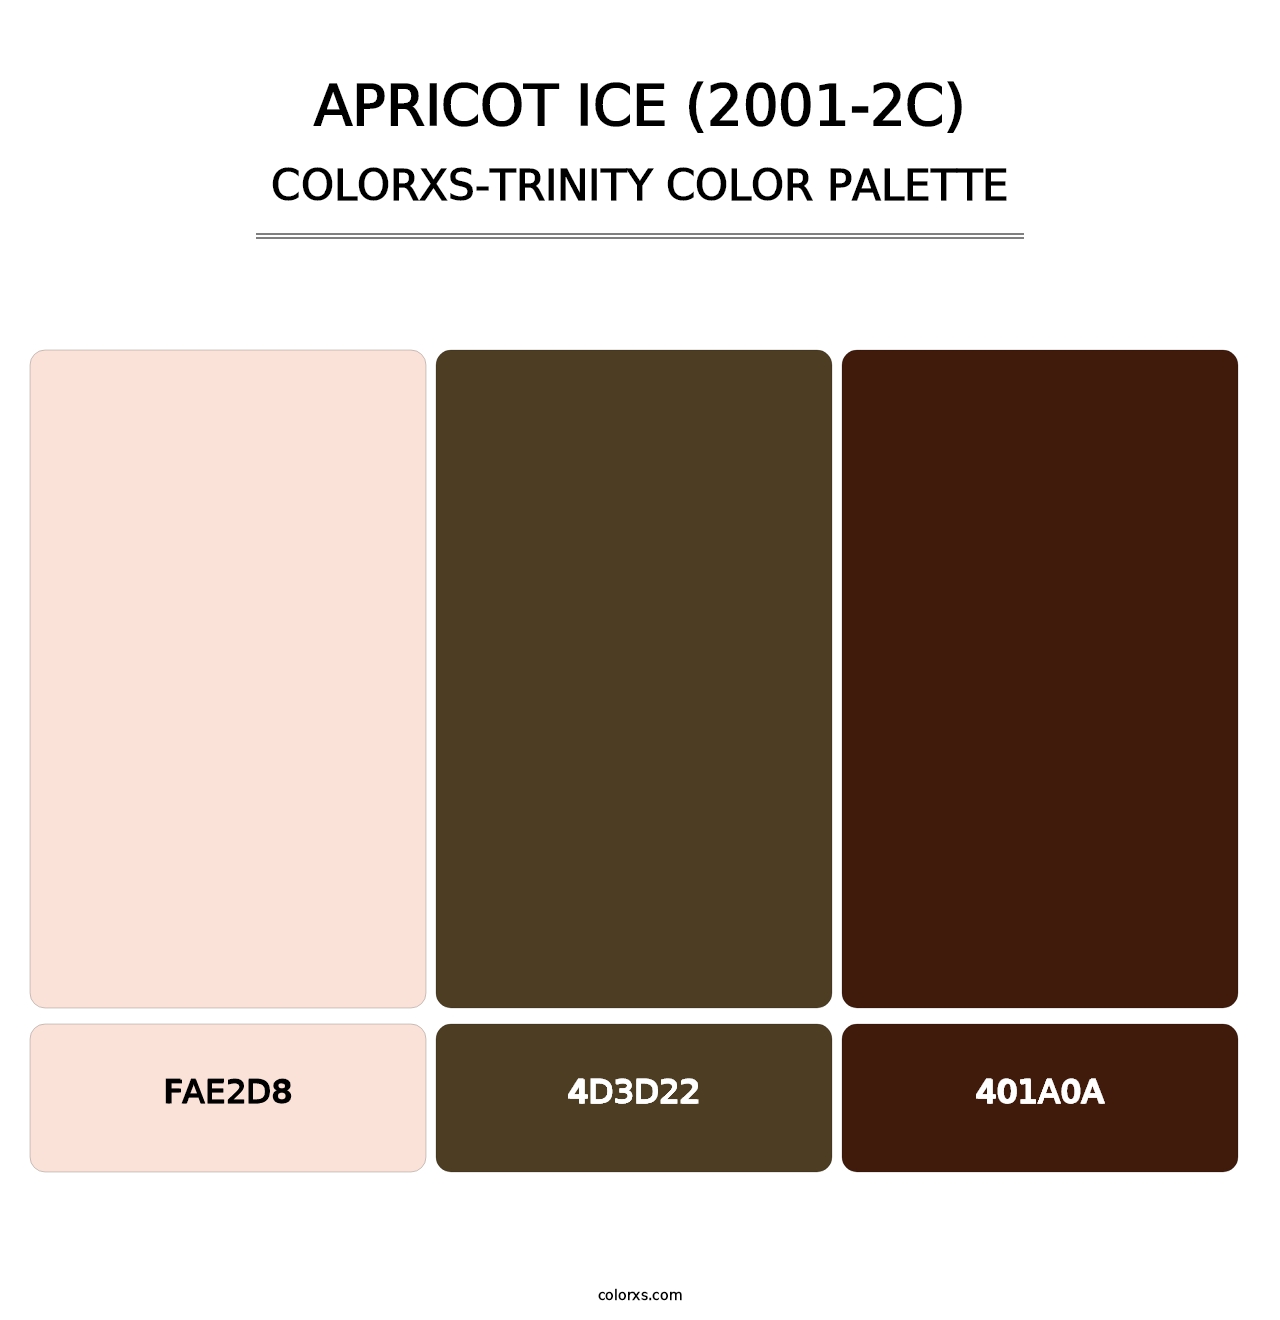 Apricot Ice (2001-2C) - Colorxs Trinity Palette